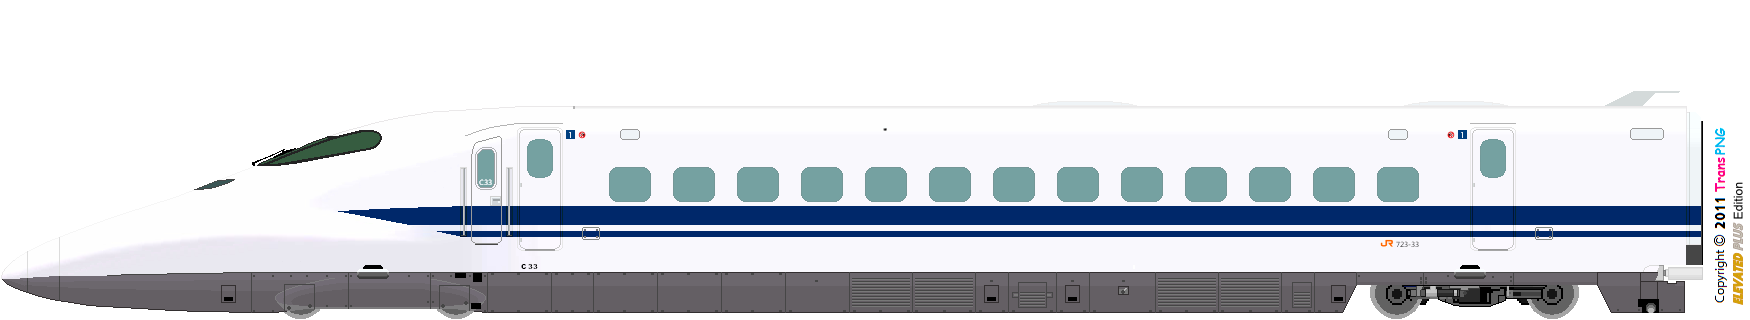 [9010] Central Japan Railway 52287586168_8b80974f20_o